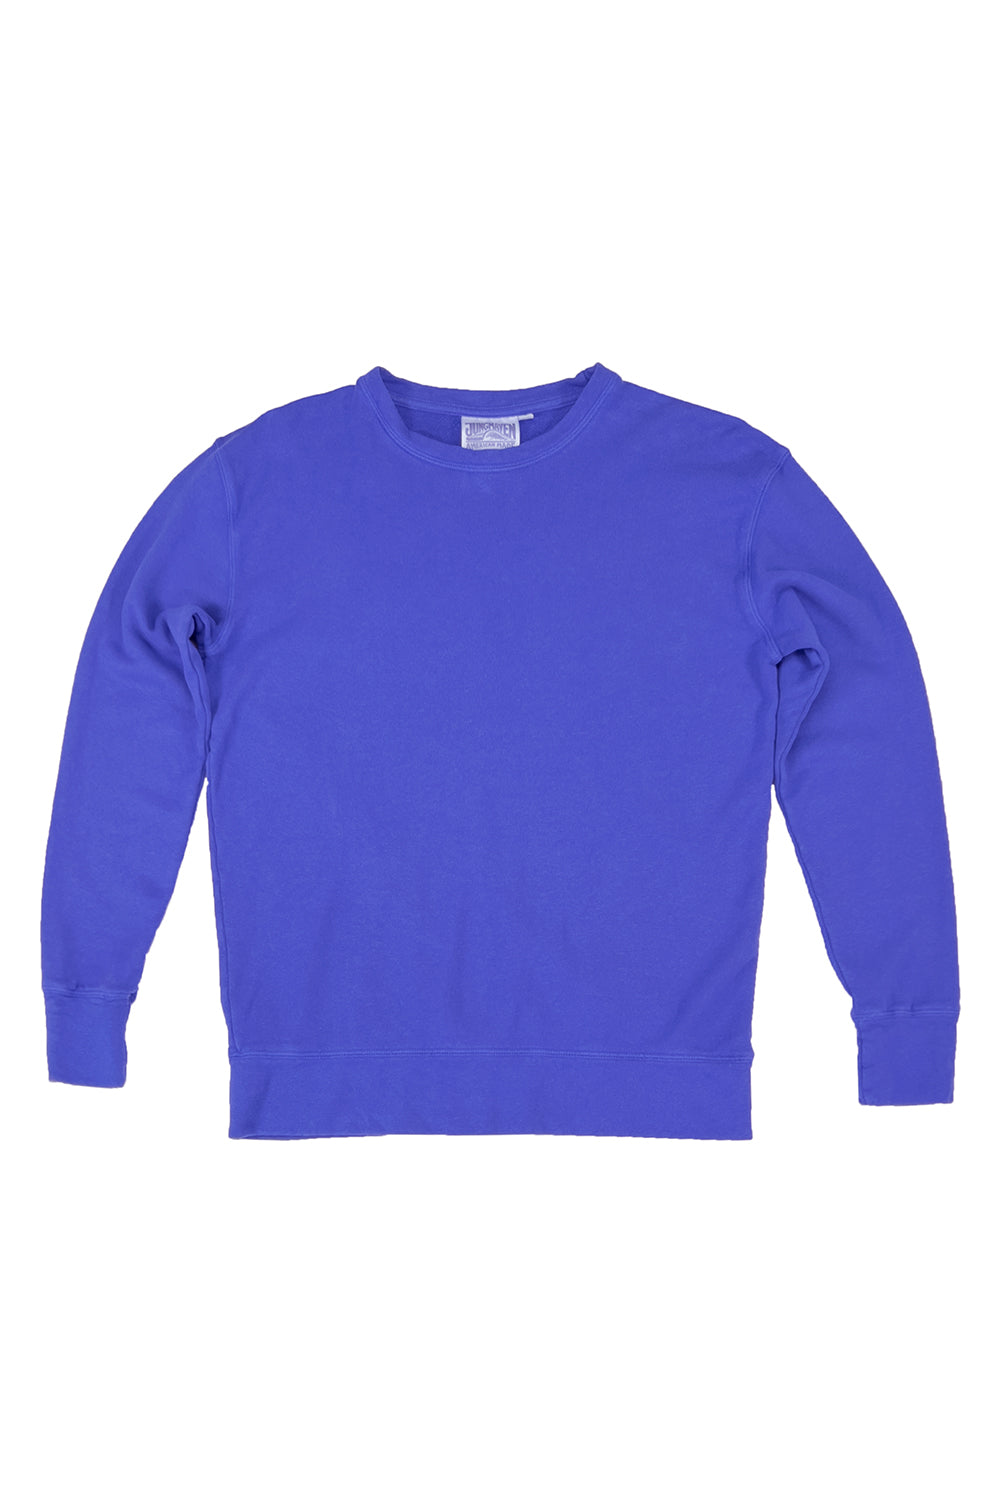 Tahoe Sweatshirt | Jungmaven Hemp Clothing & Accessories / Color: Grape Soda